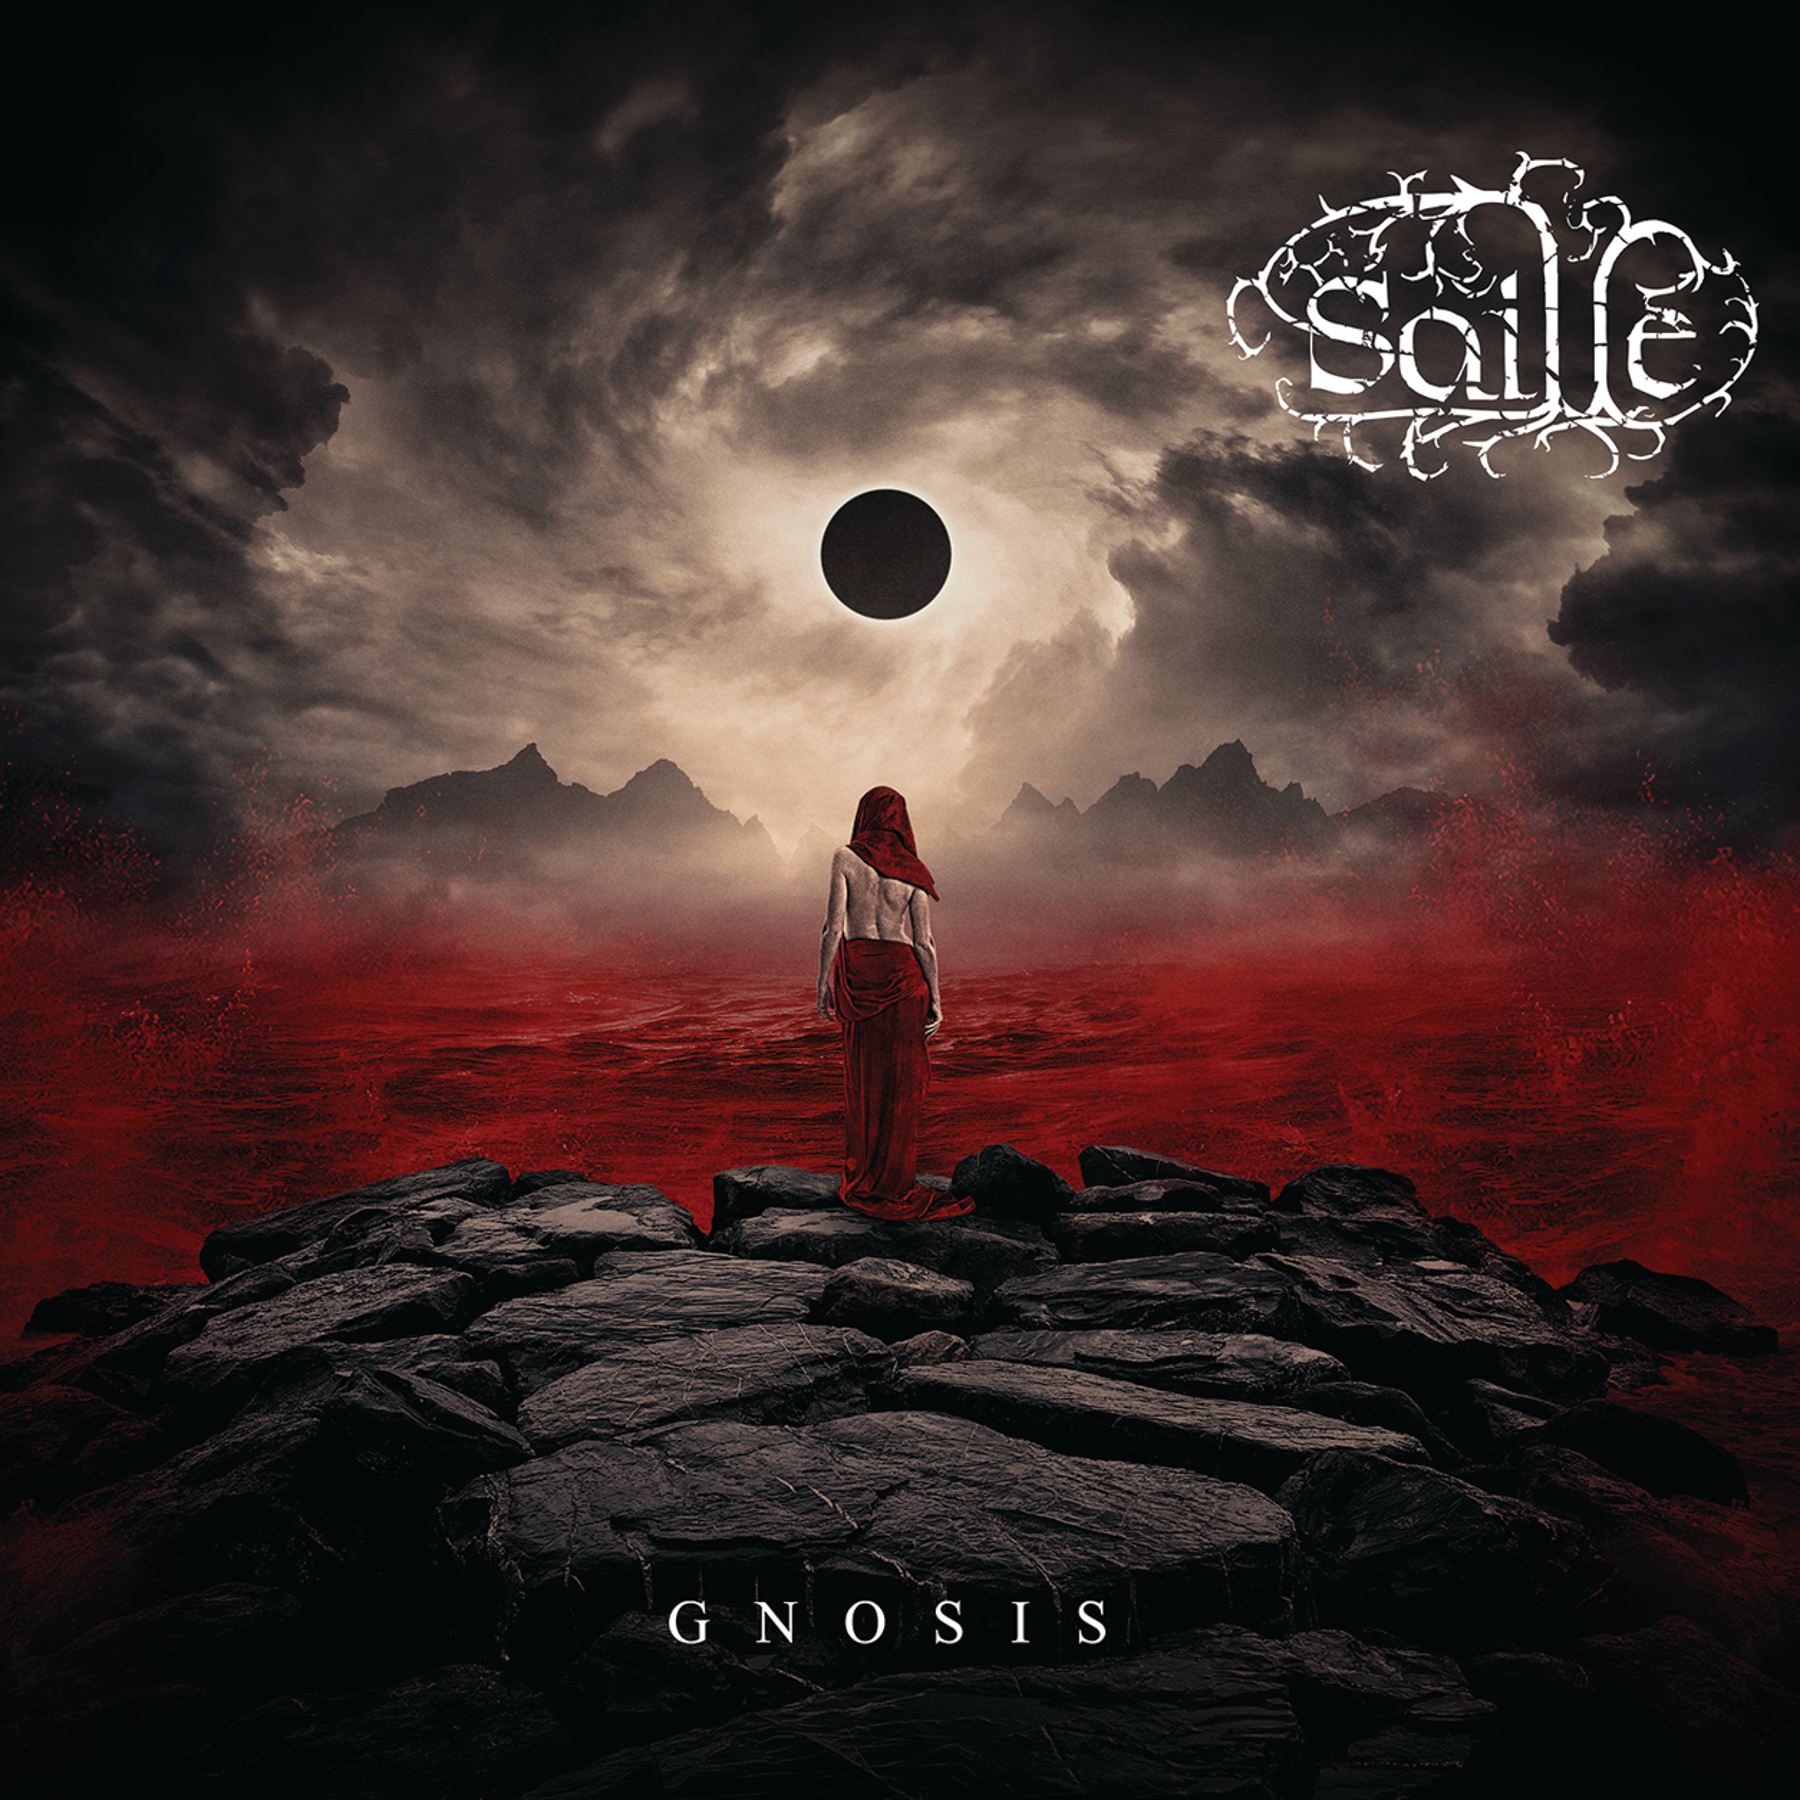 Saille – Gnosis